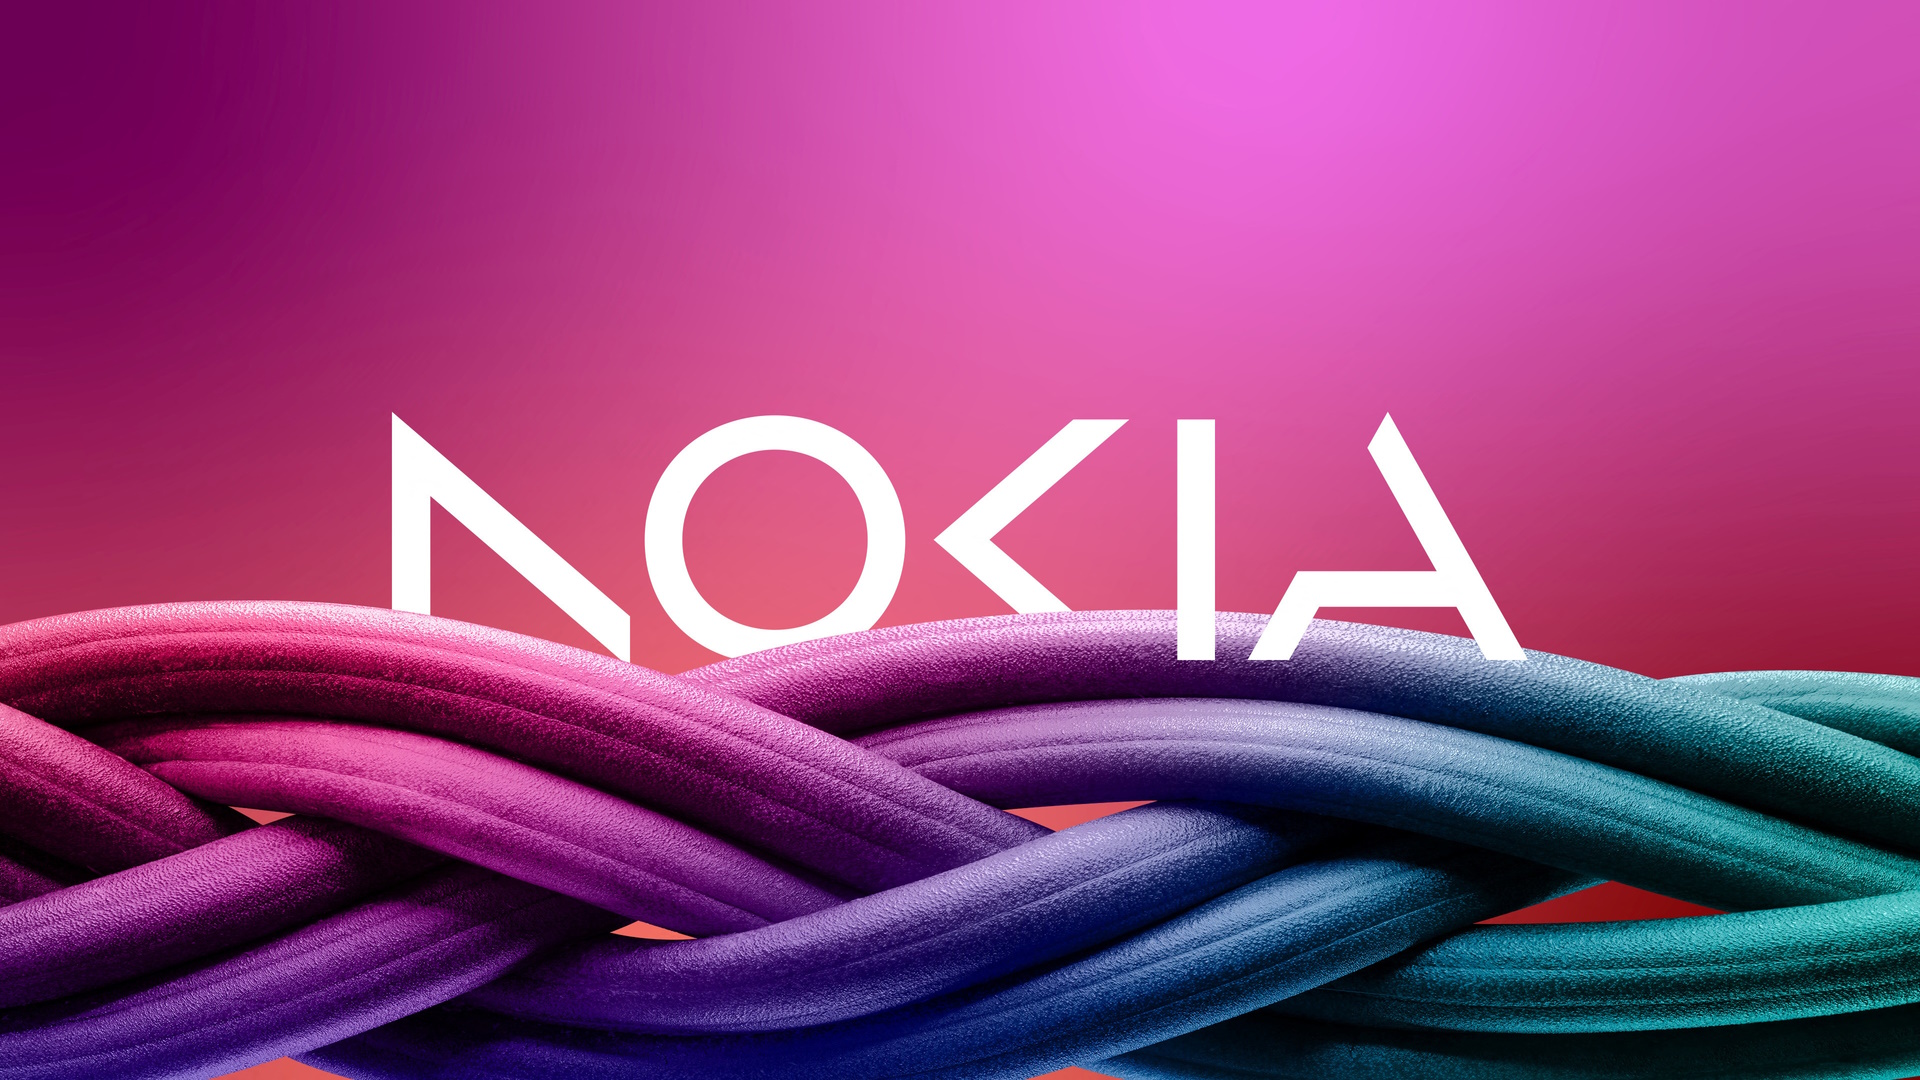 Nokia-logo01.jpg